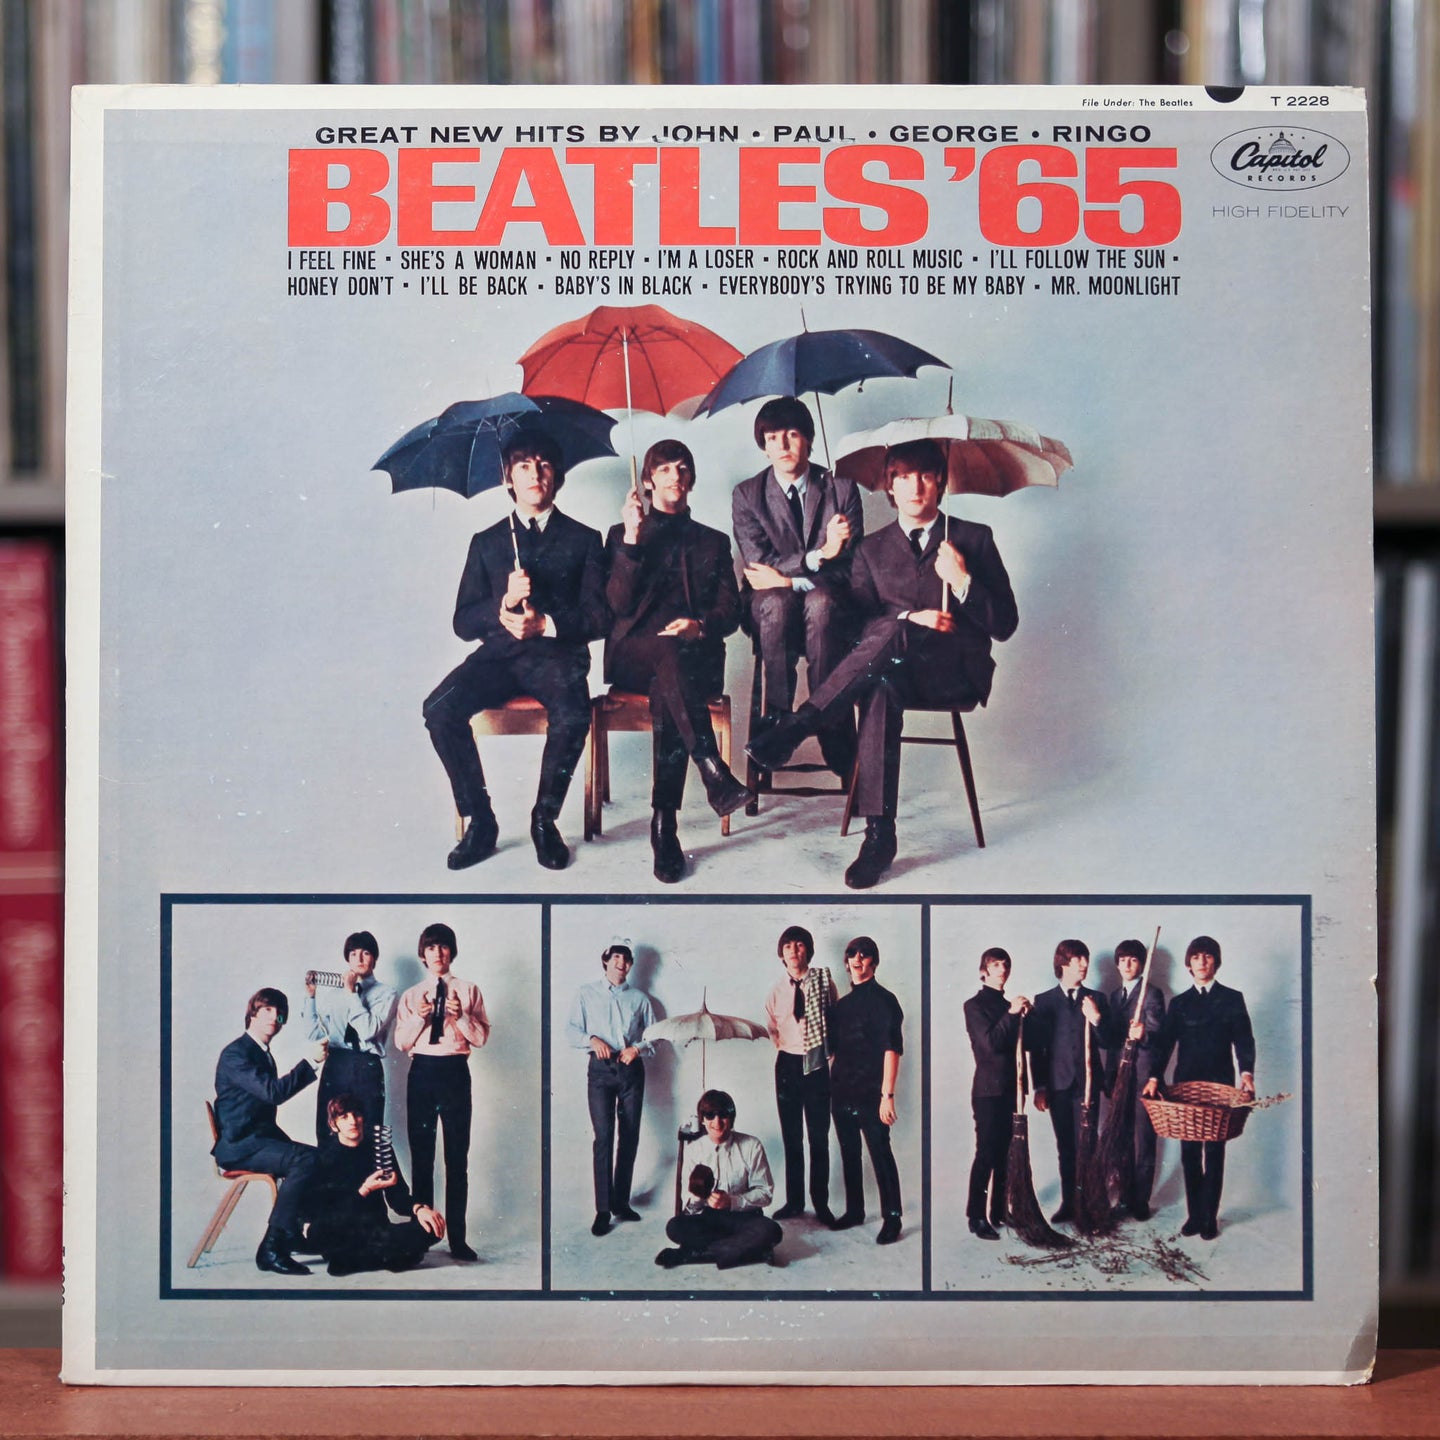 The Beatles - Beatles '65 - 1964 Capitol, VG+/VG+